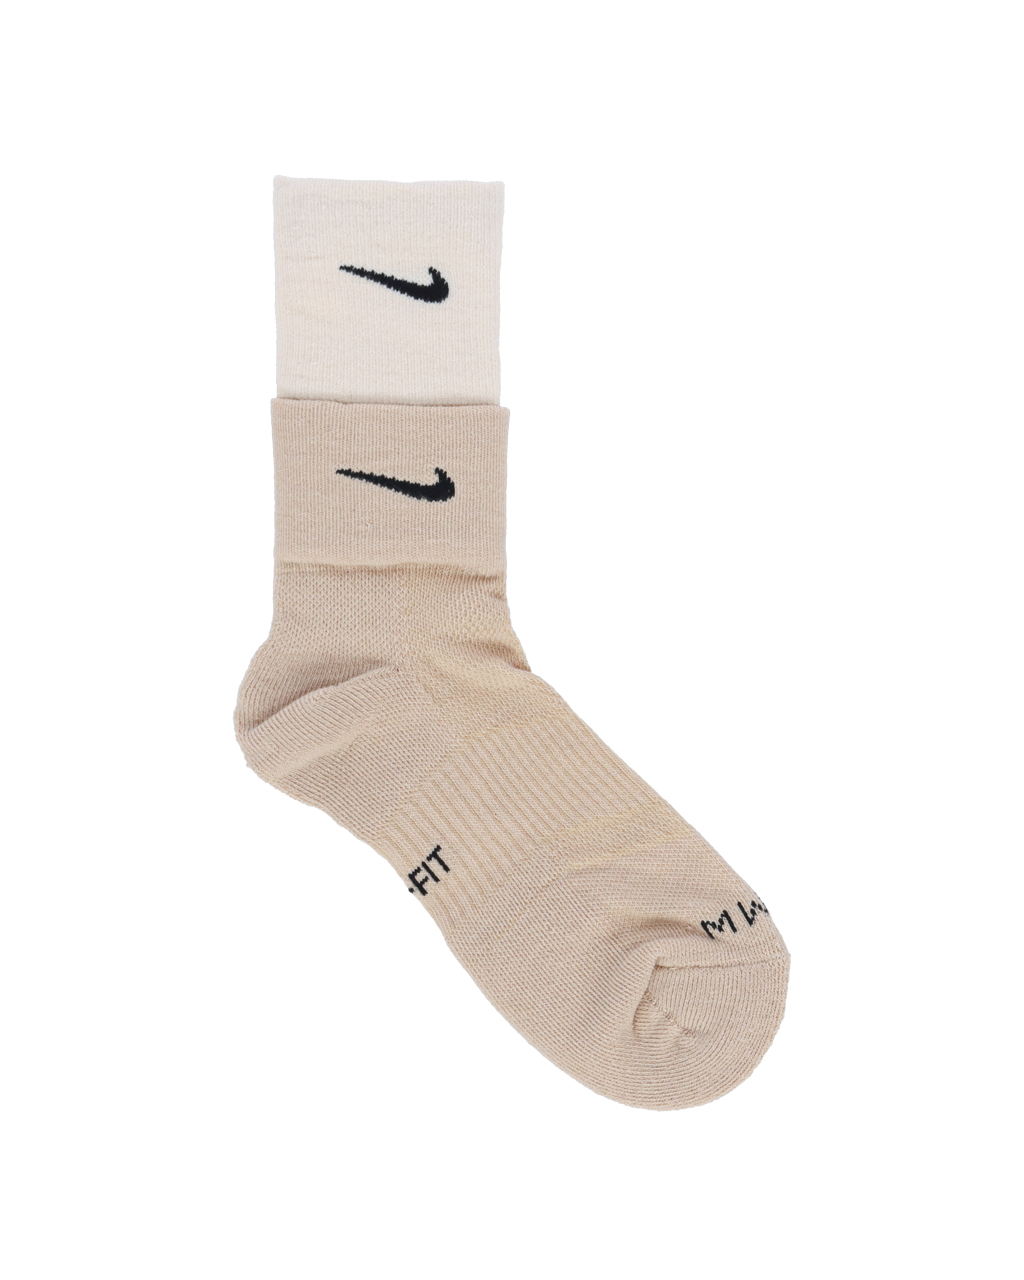 Nike x MMW Socks Desert - FW21 - US